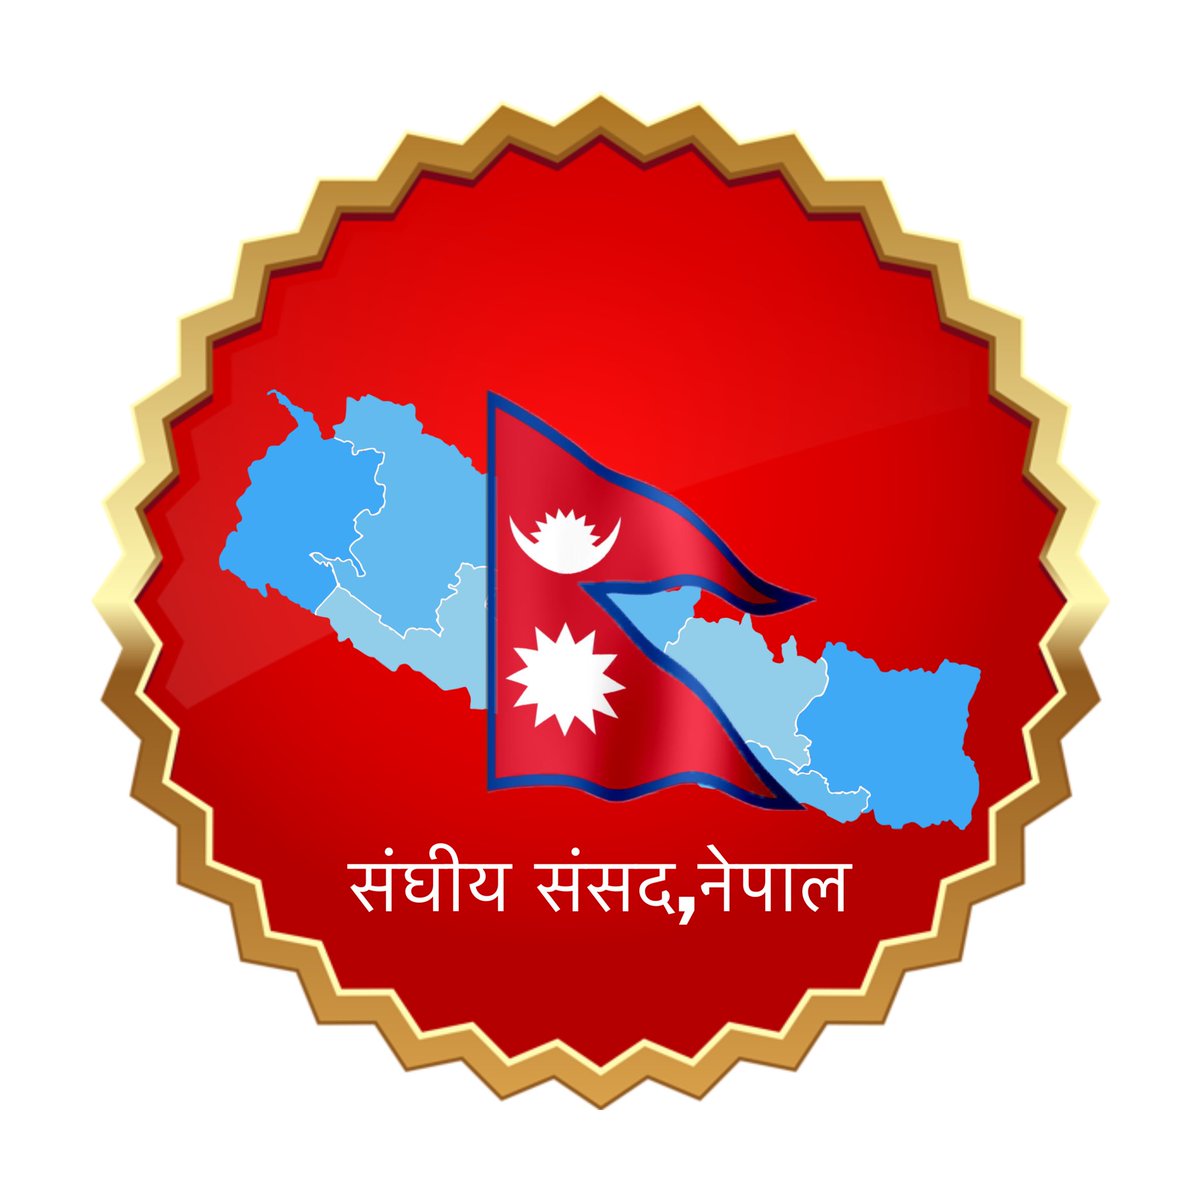 मैले बनाएका केही लोगोहरु ! 😄😄🇳🇵 #Logo #GovernmentOfNepal #FederalParliament_Nepal